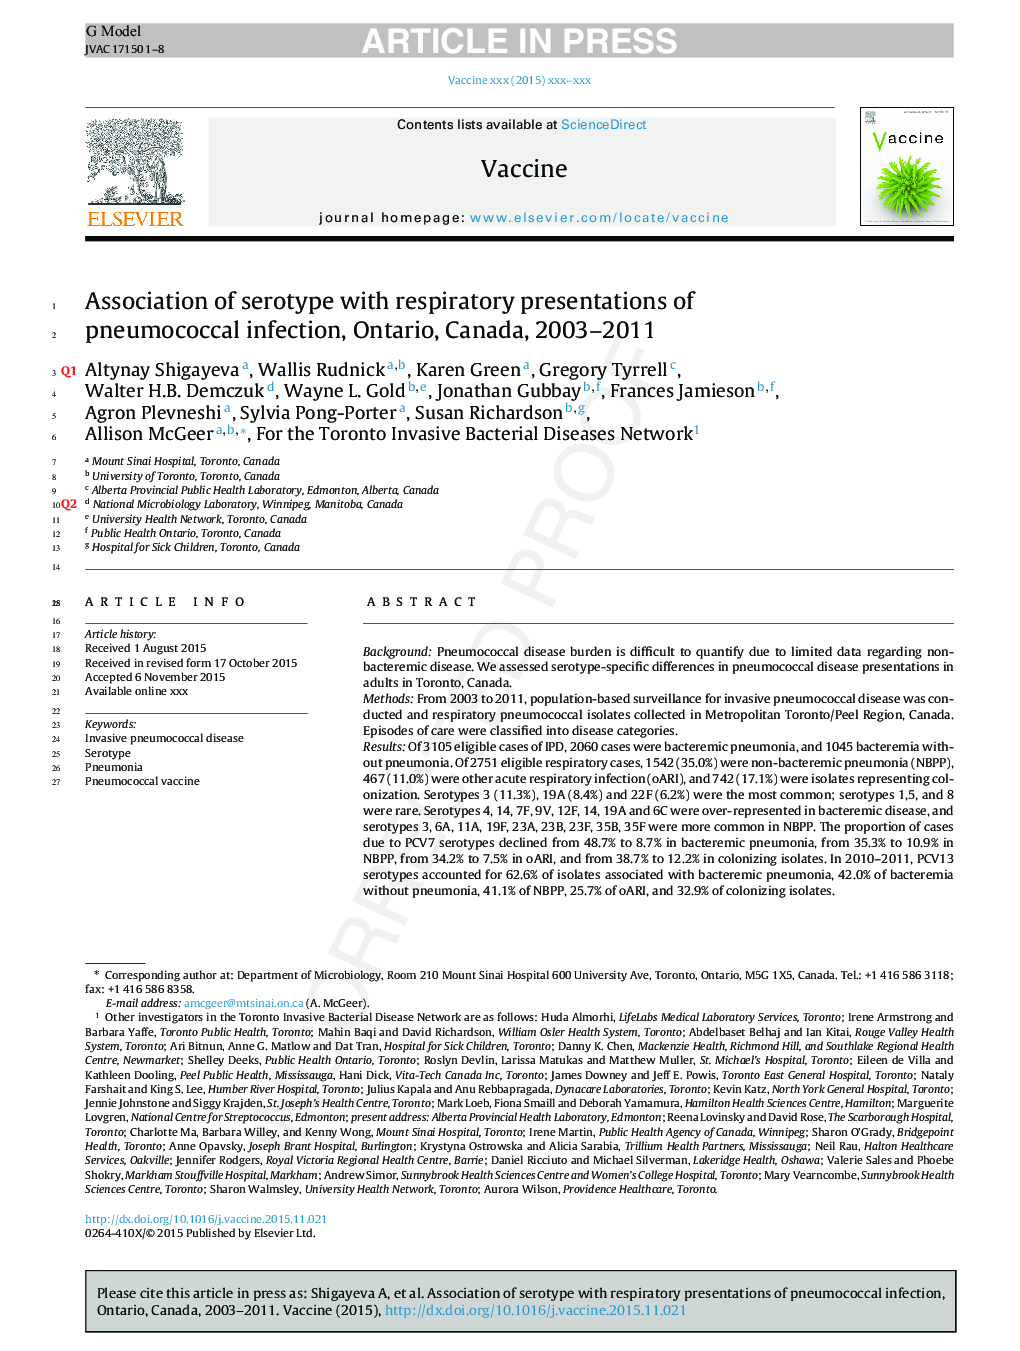 انجمن سروتایپ با ارائه تنفس عفونت پنوموکوک، انتاریو، کانادا، 2003-2011 